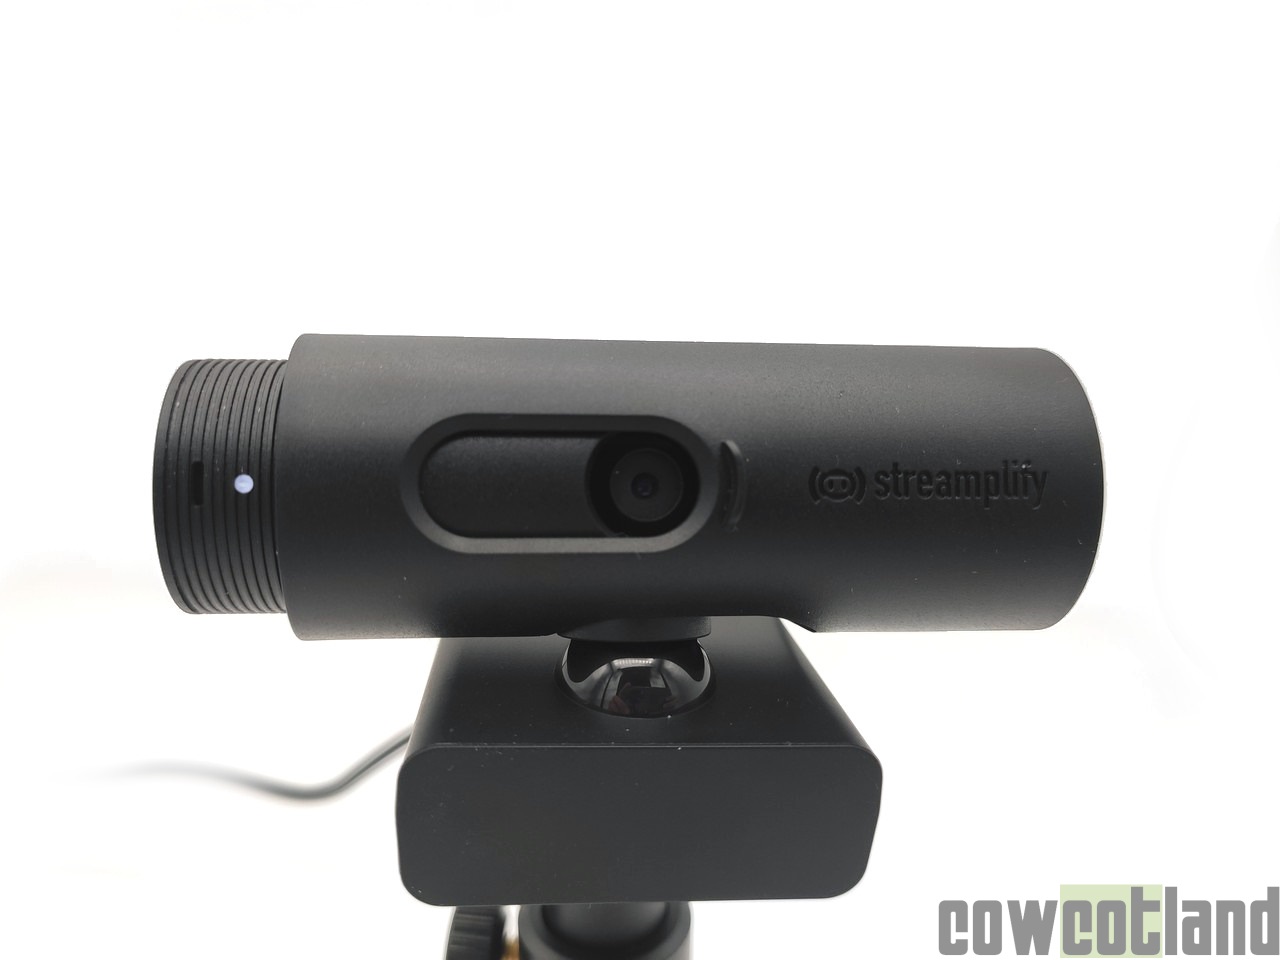 Image 47293, galerie Test webcam Streamplify CAM, une webcam abordable pour streamer